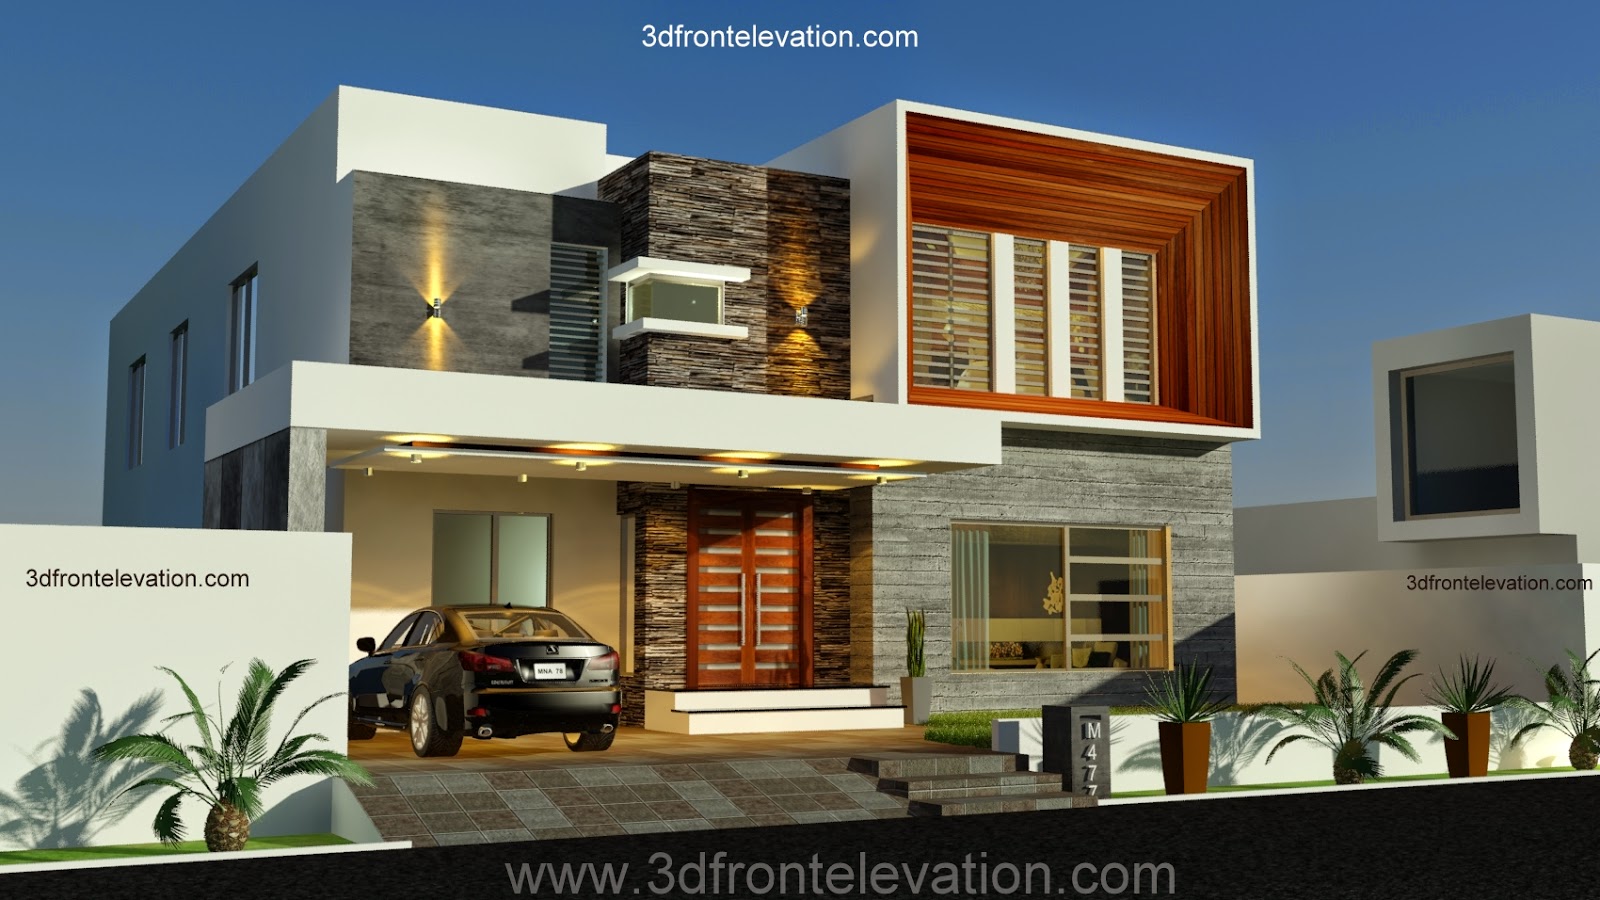 Beautiful Home Design Sri Lanka Ideas Amazing Design Ideas New